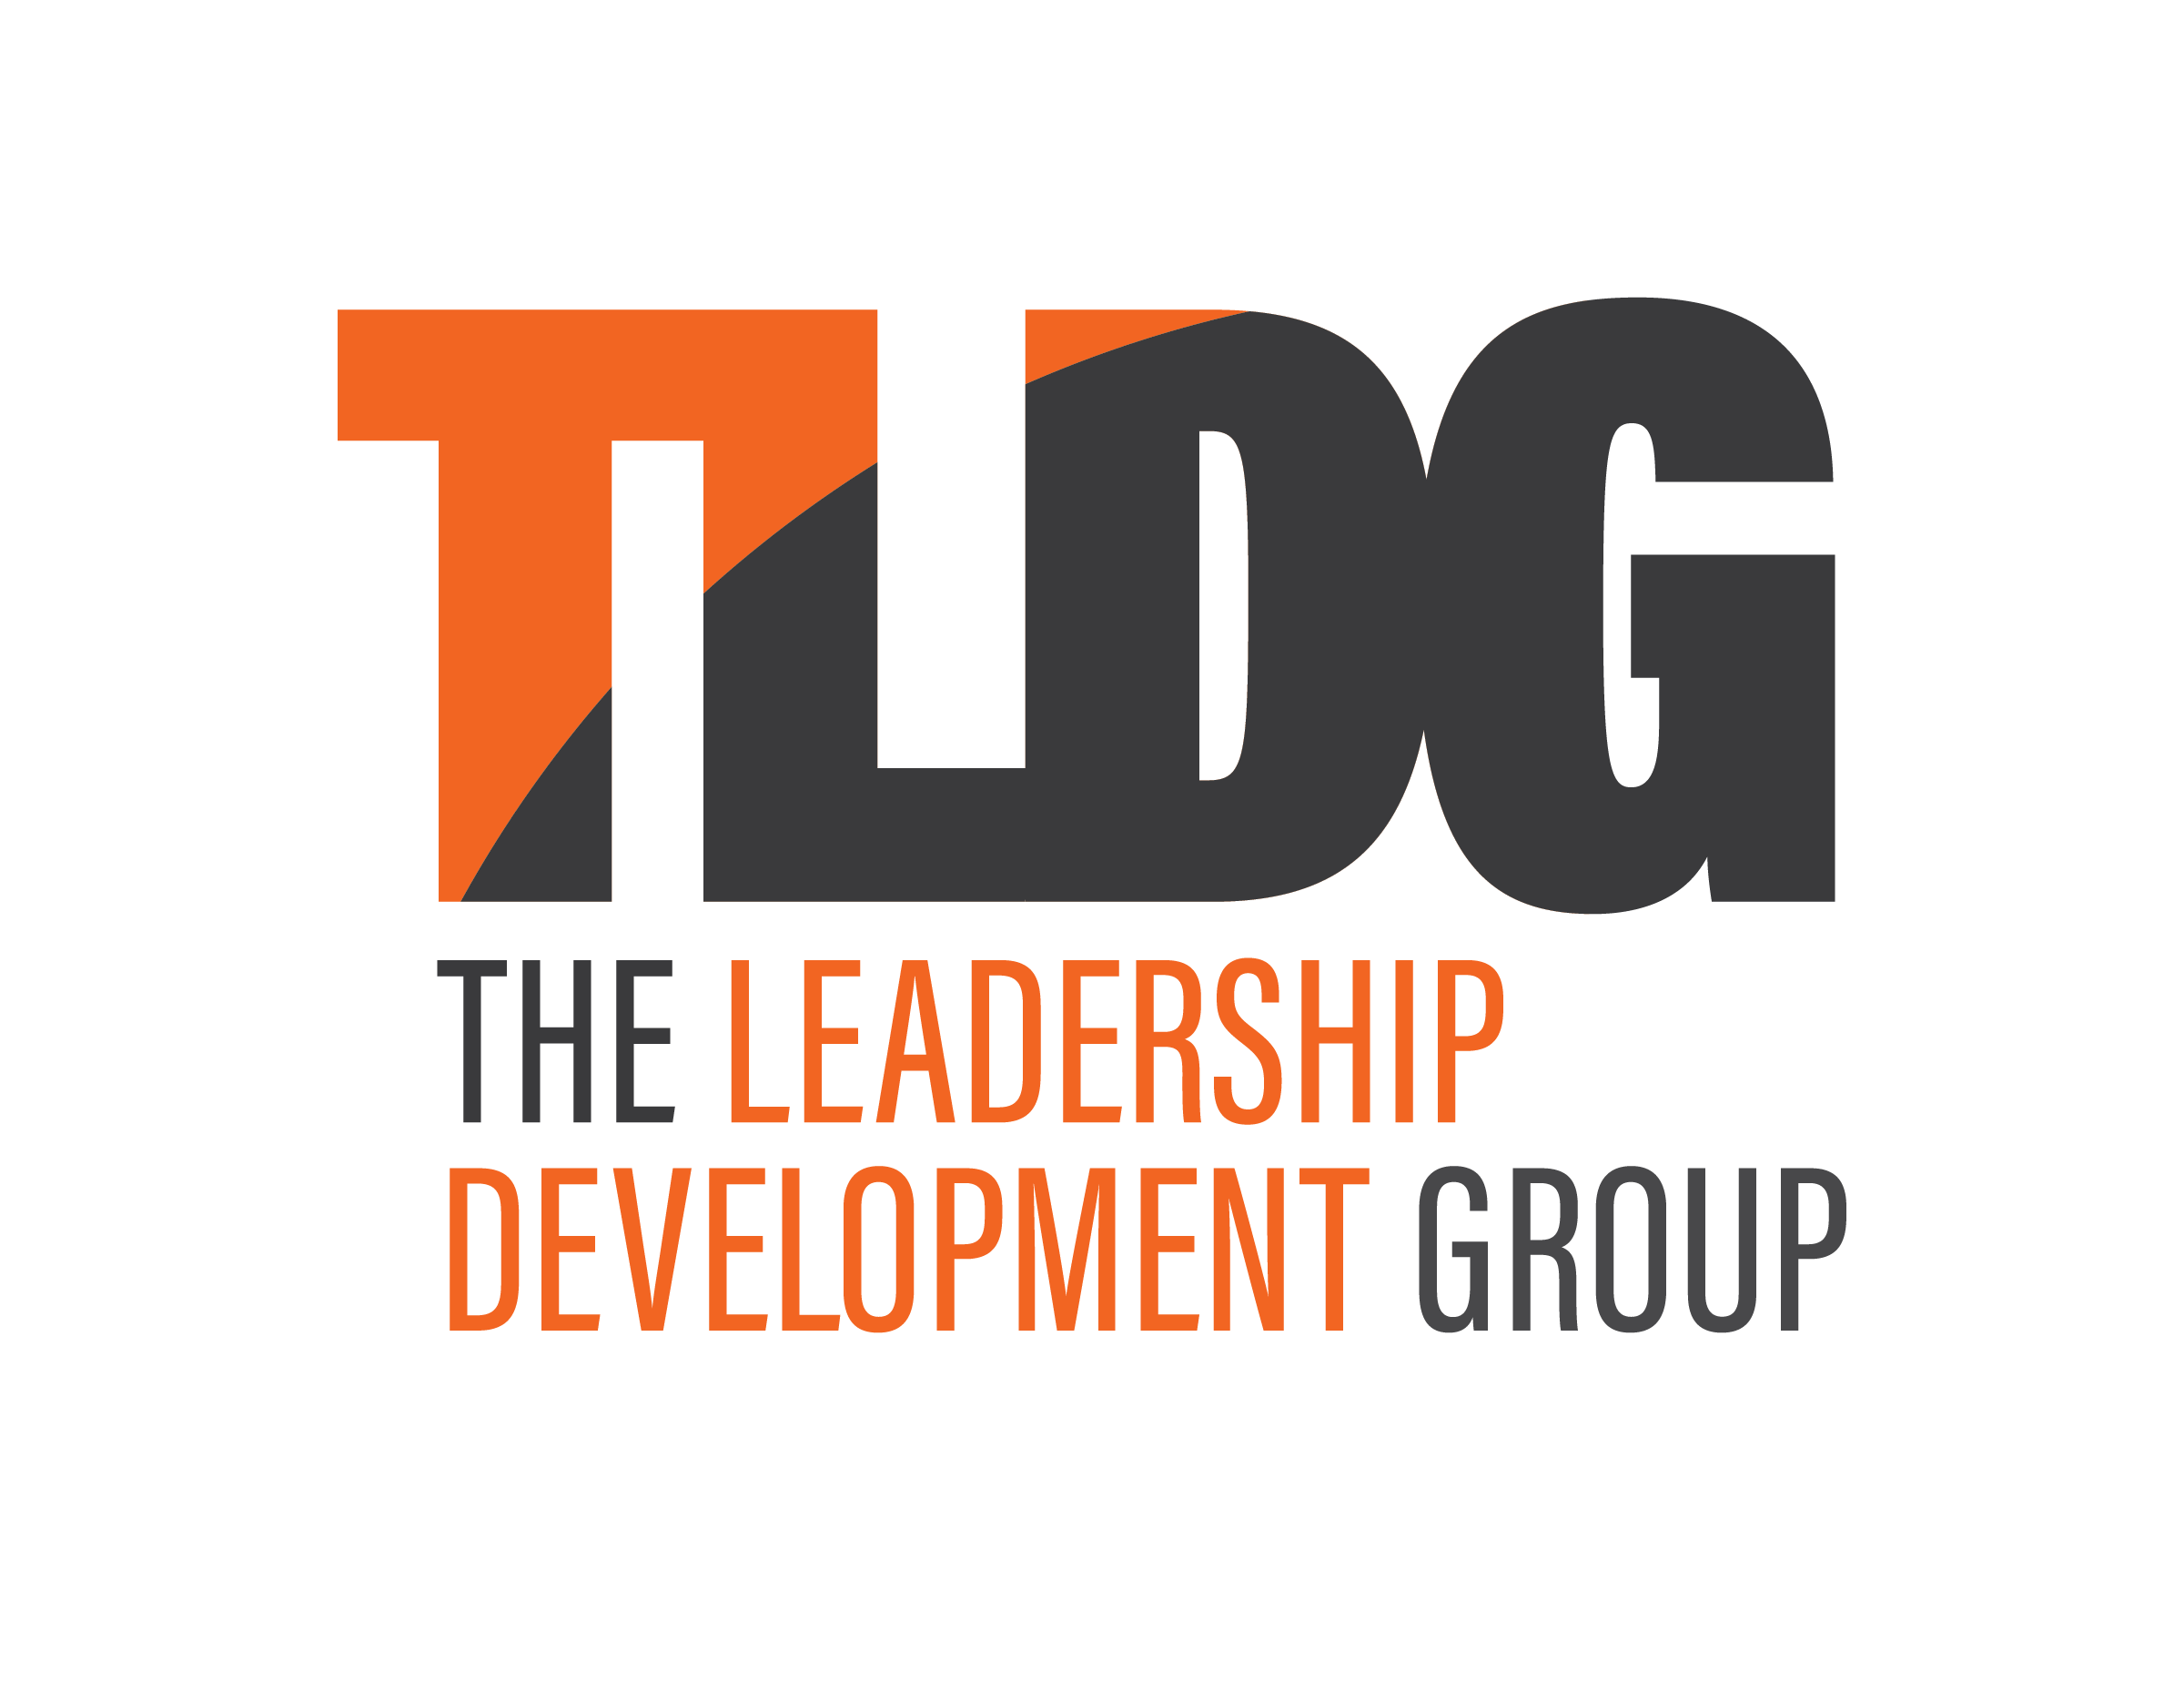 The Leadership Development Group